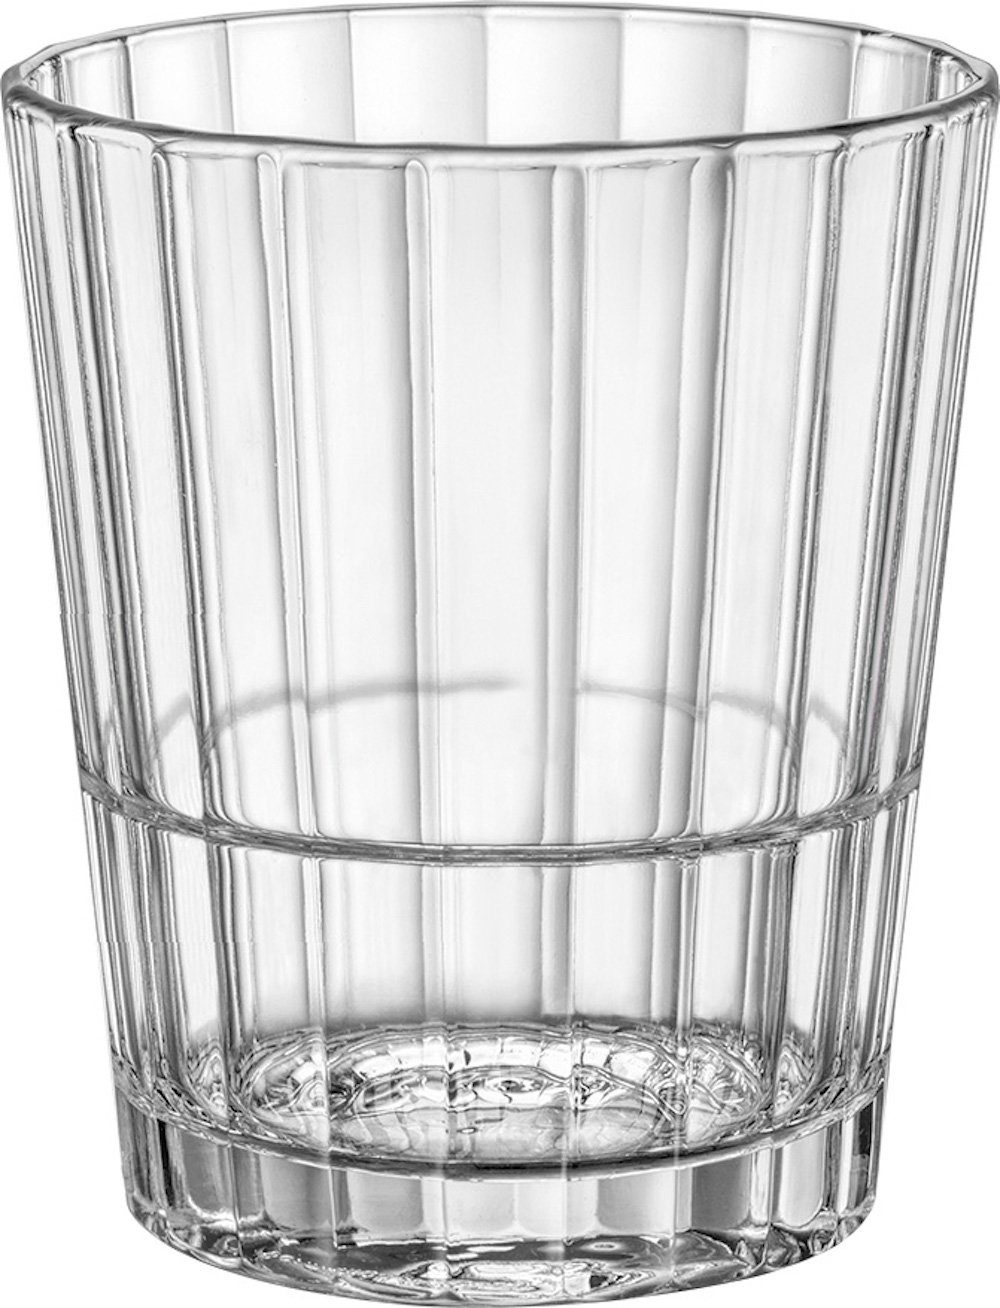 Bormioli Rocco Tumbler-Glas Oxford Bar, gehärtet 312ml 6 Glas Transparent gehärtet, stapelbar Stück Tumbler Trinkglas Glas